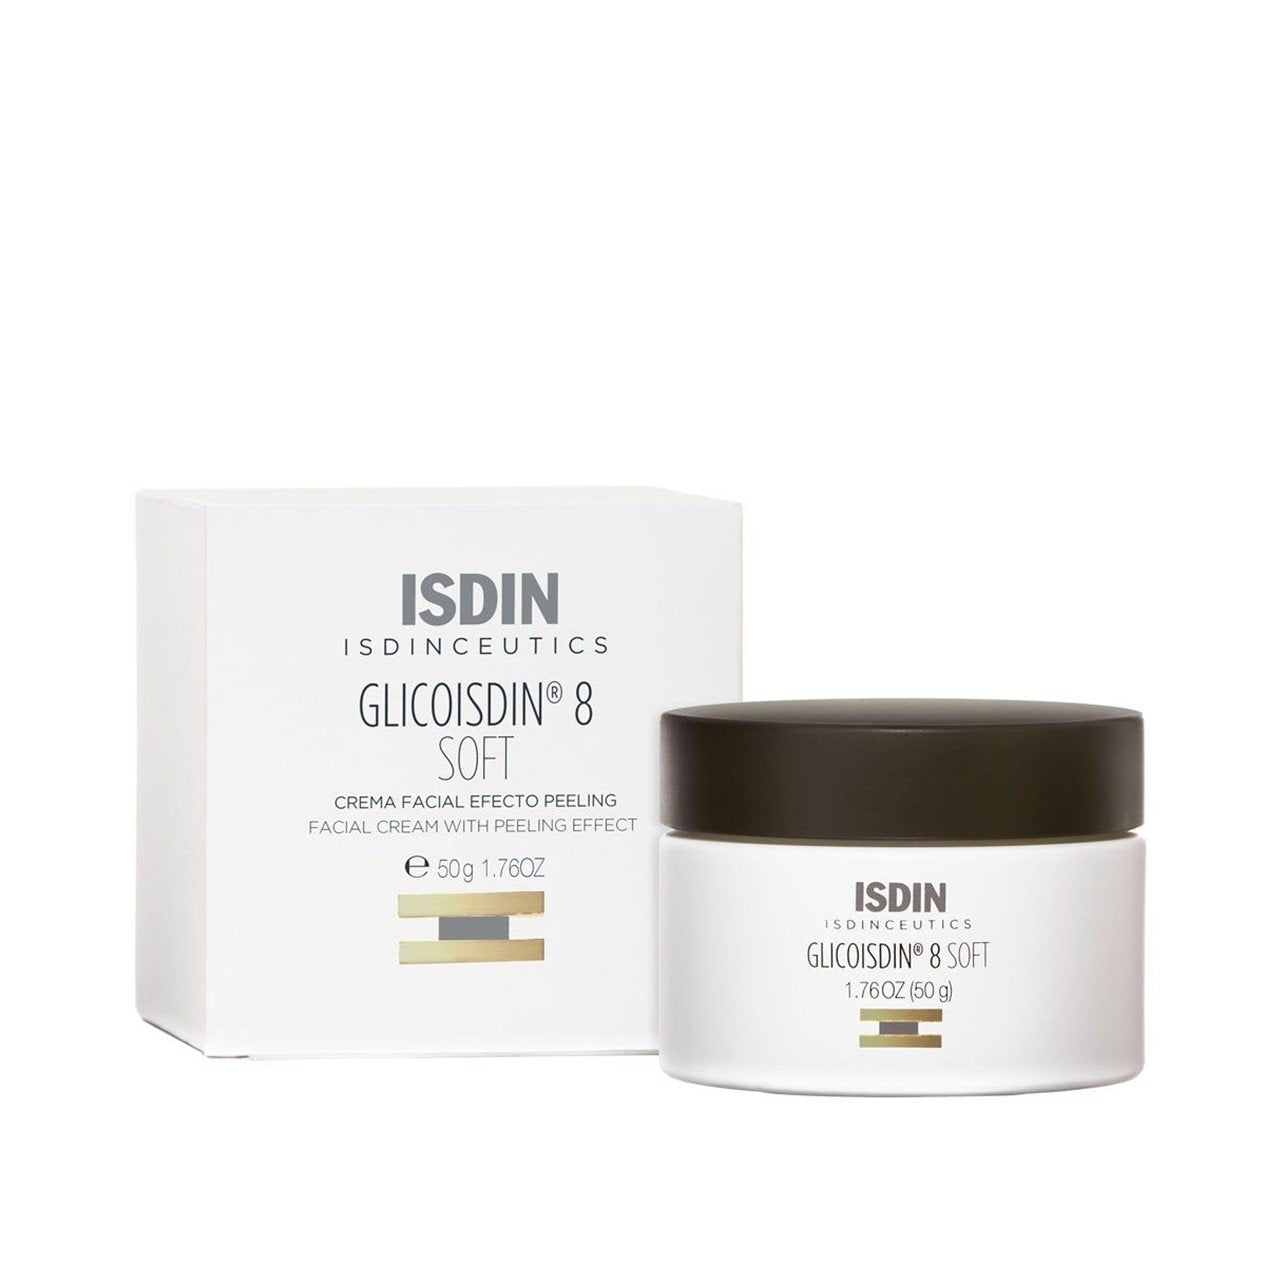 ISDINceutics Glicoisdin 8 Soft Cream With Peeling Effect 50g